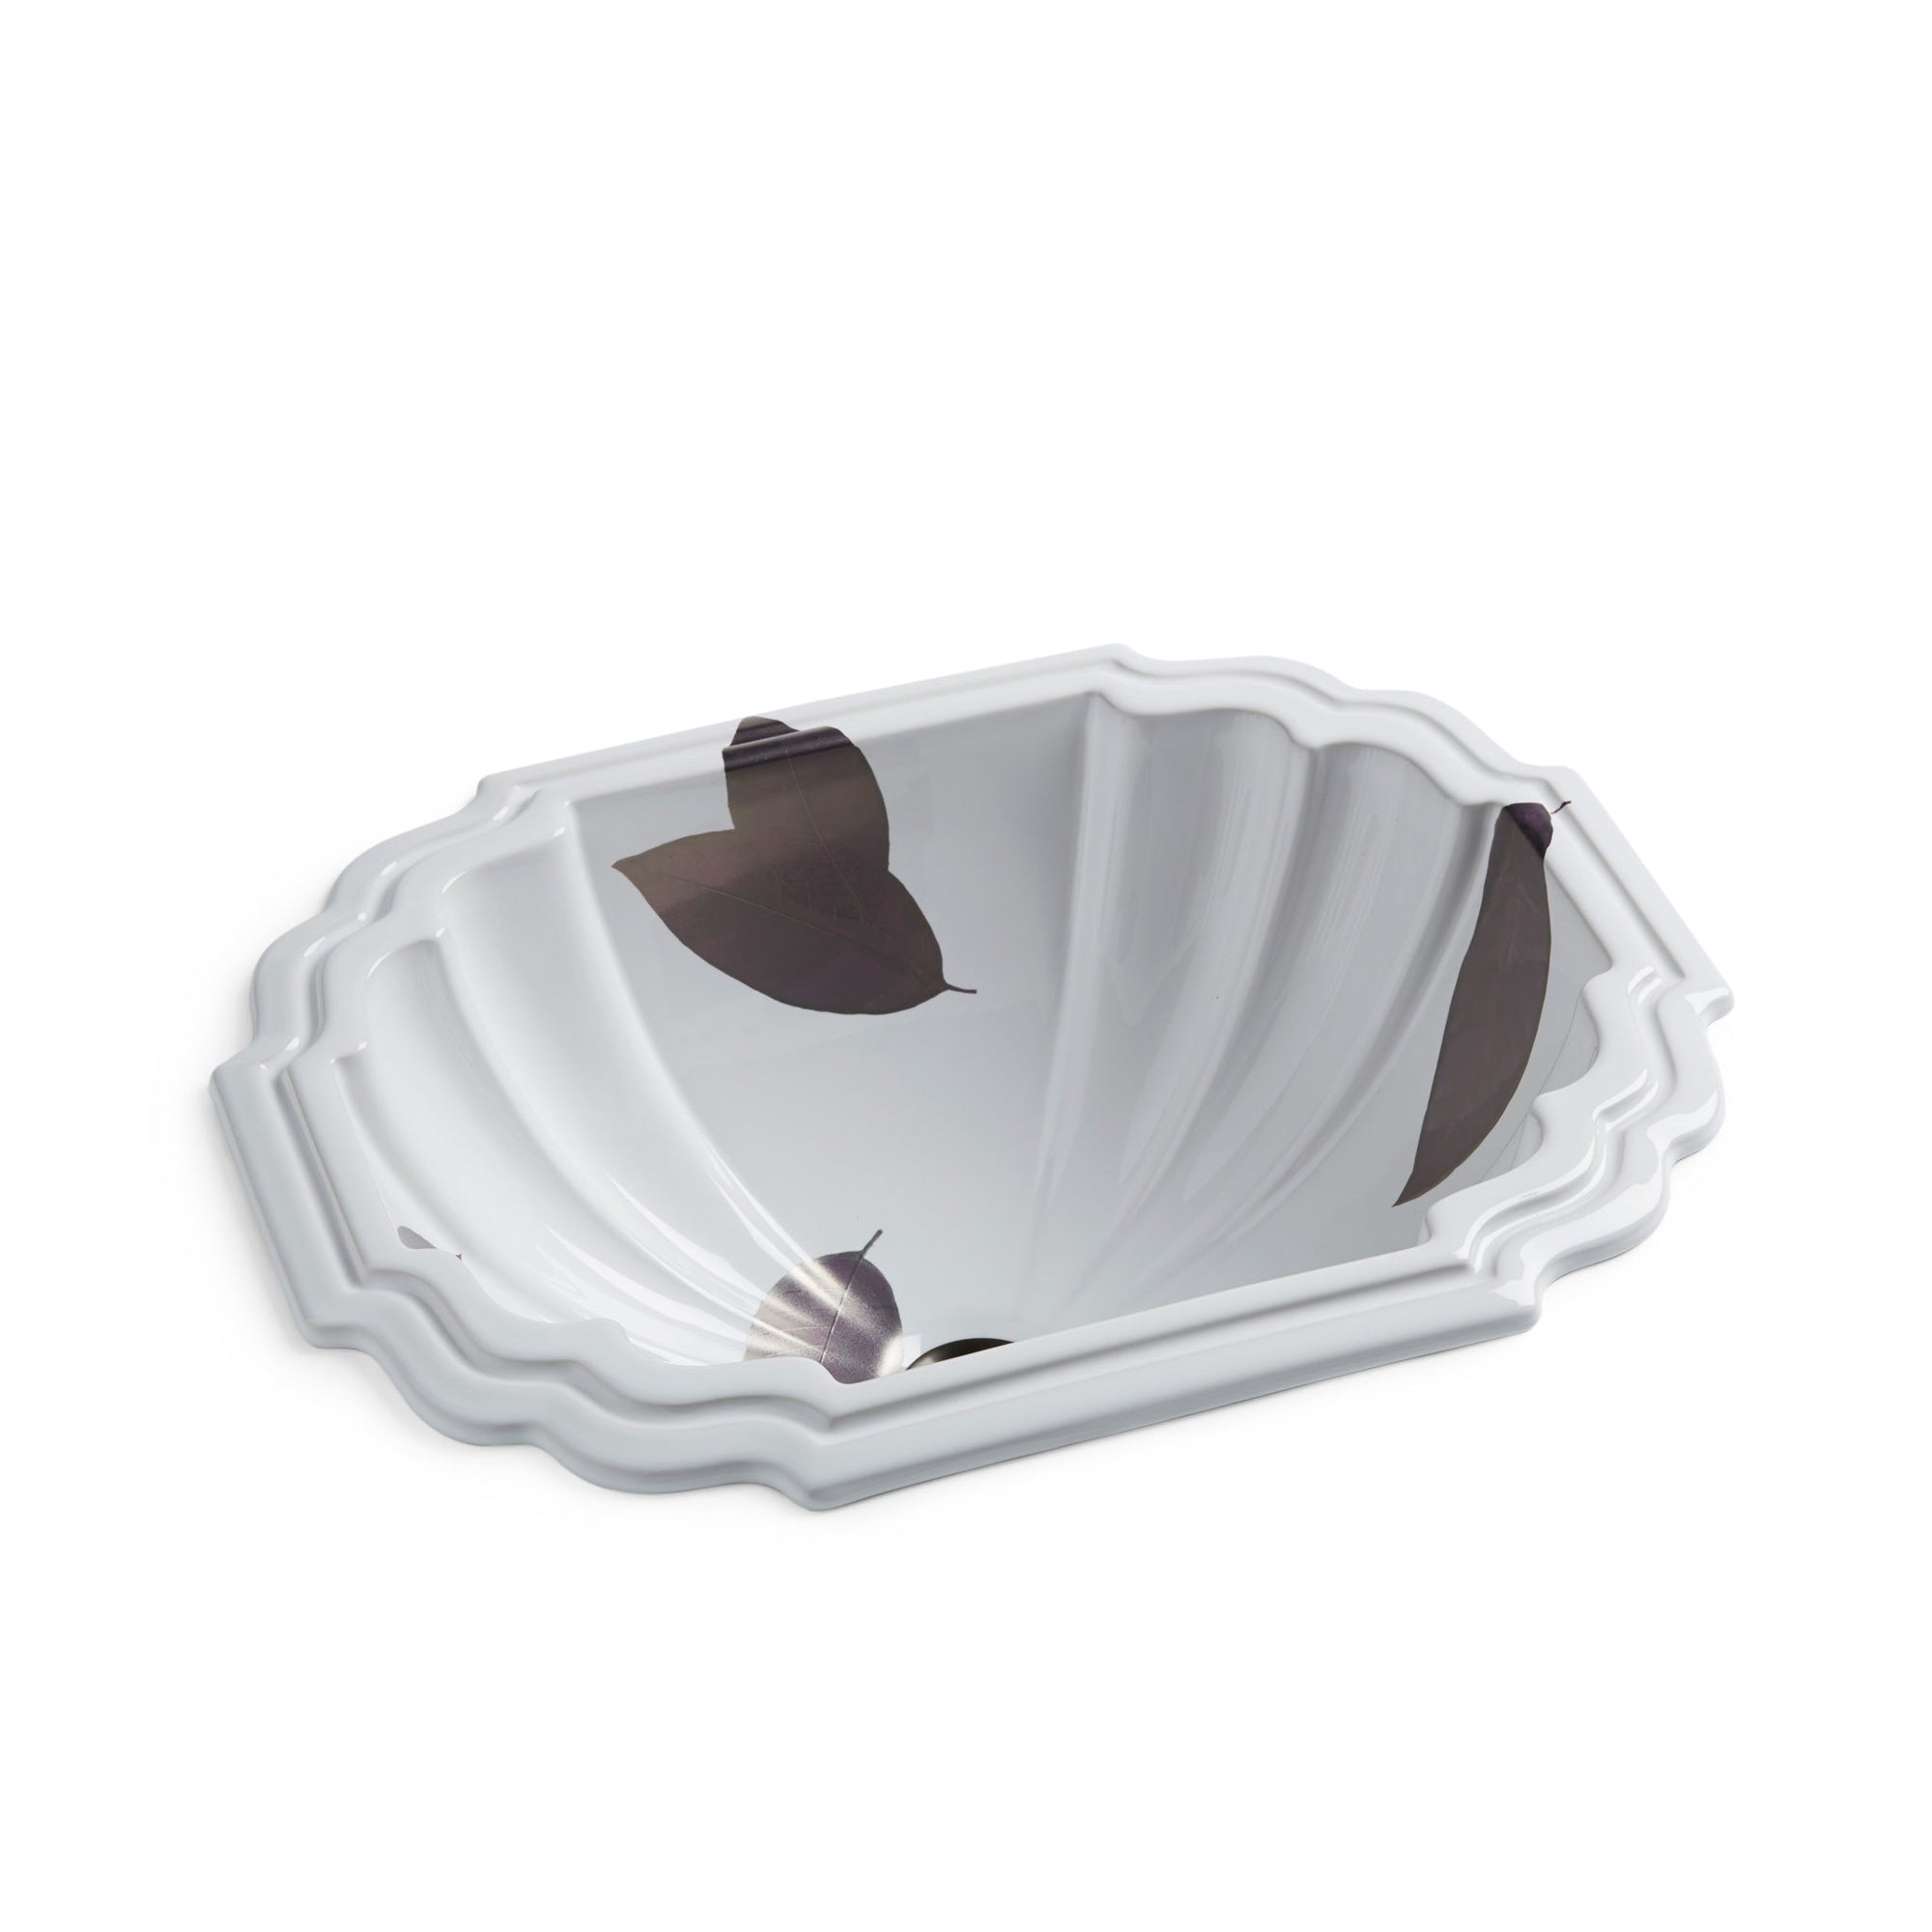 OE5-25PL-WH Sherle Wagner International Platinum Random Leaves on White Georgian Ceramic Over Edge Sink